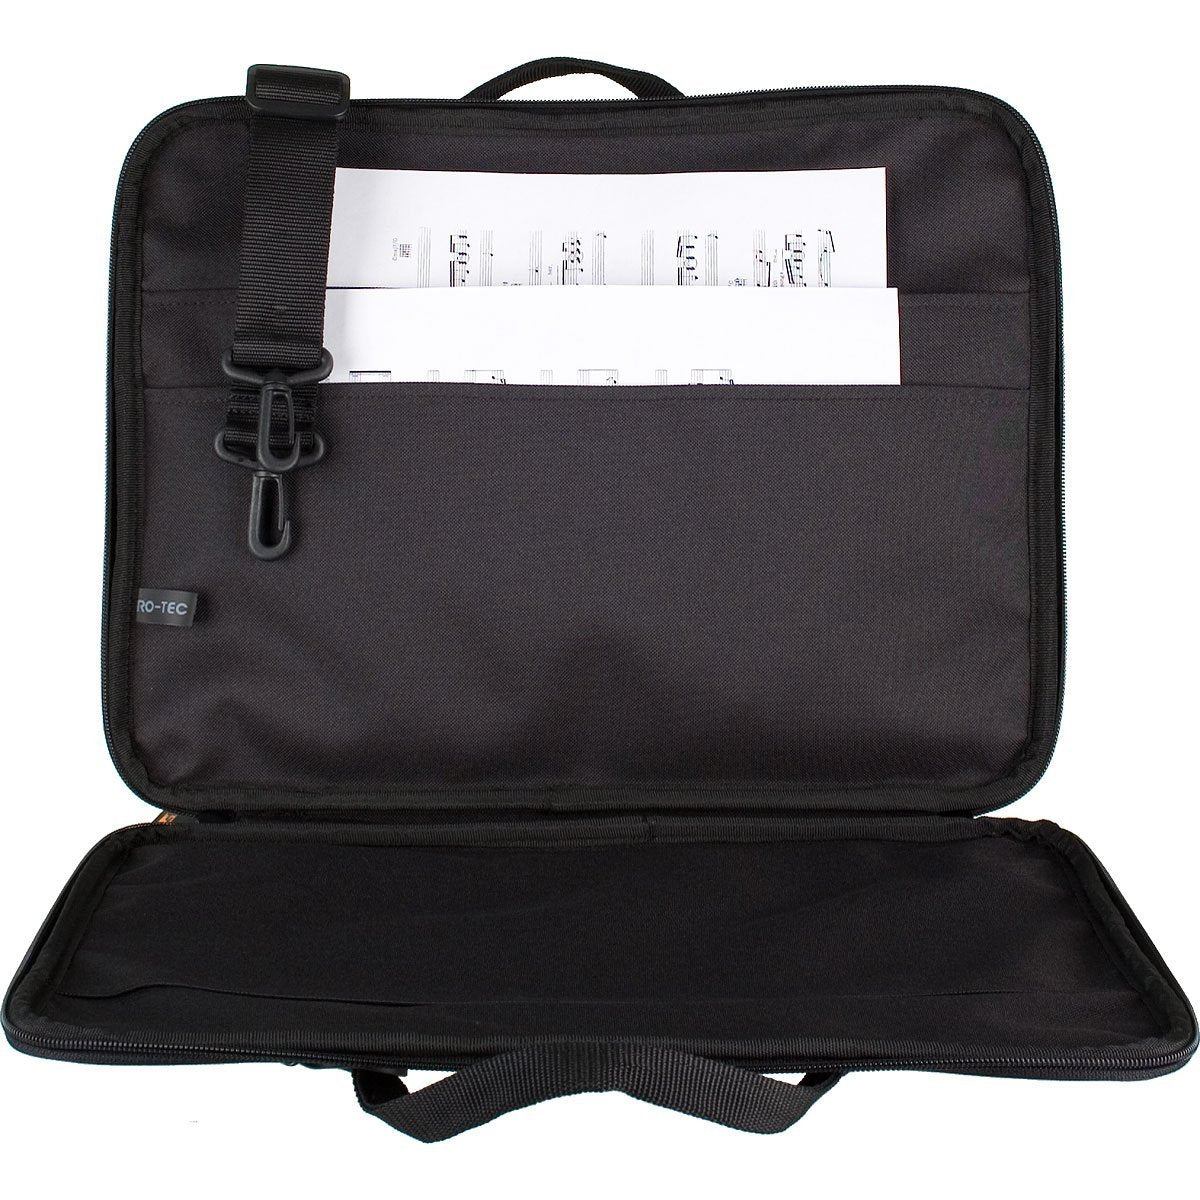 Protec Music Portfolio Bag with Shoulder Strap in Black